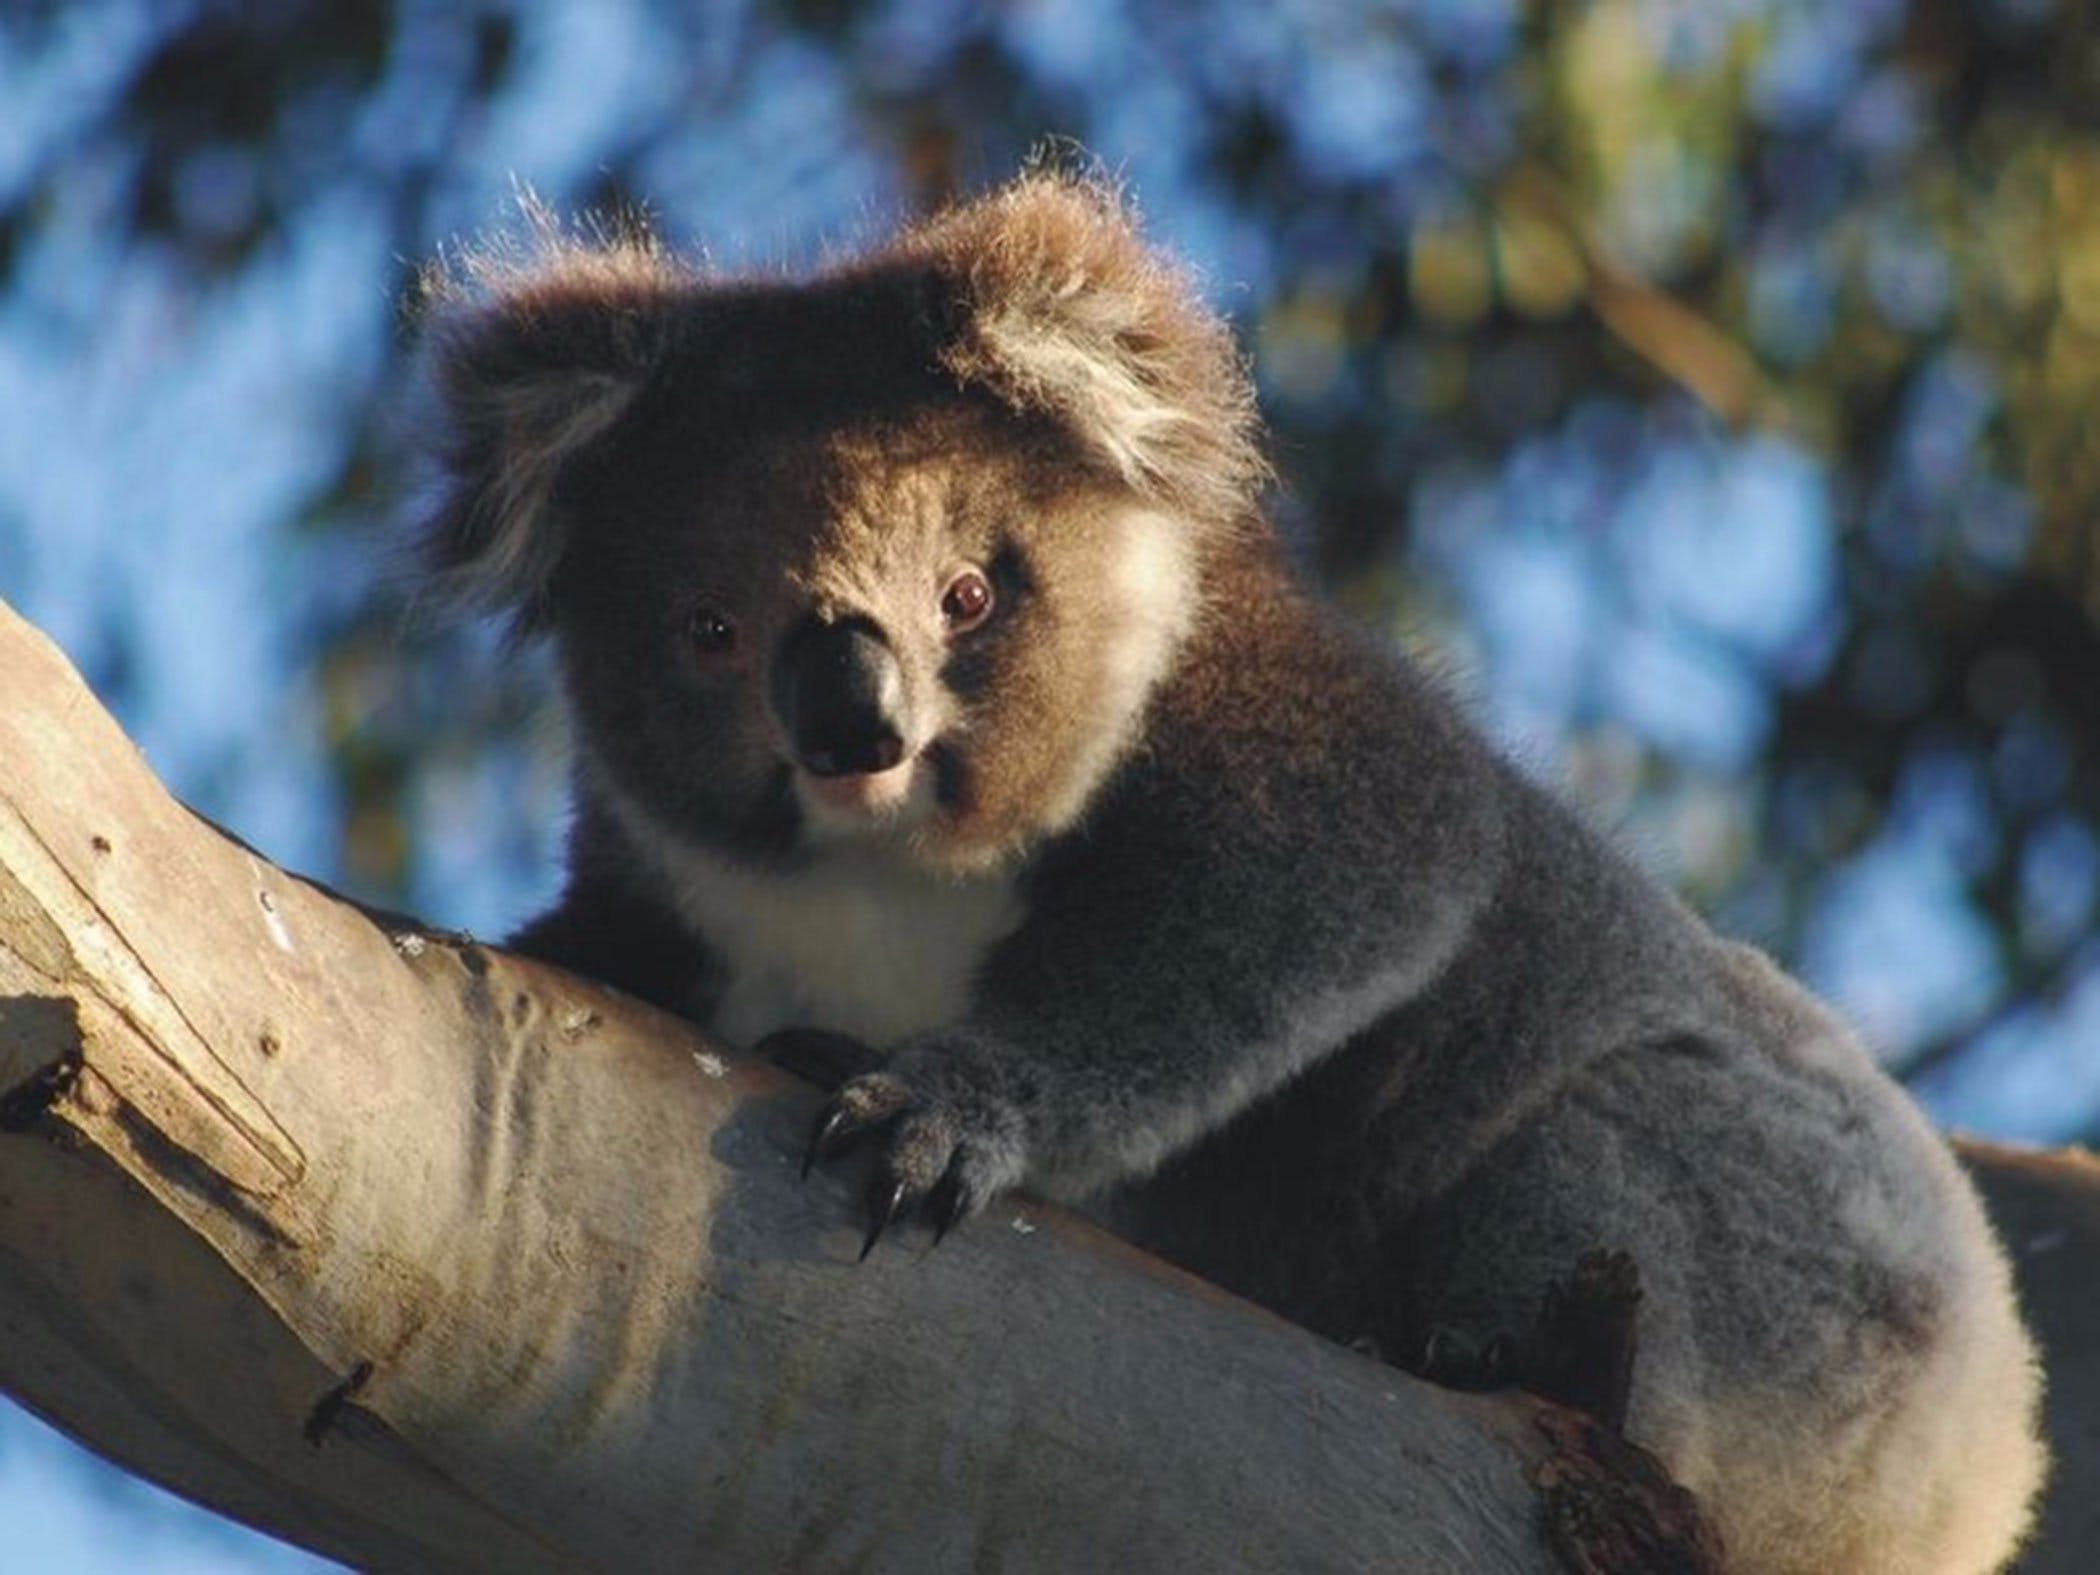 Bimbi Park Camping Under Koalas - Tweed Heads Accommodation